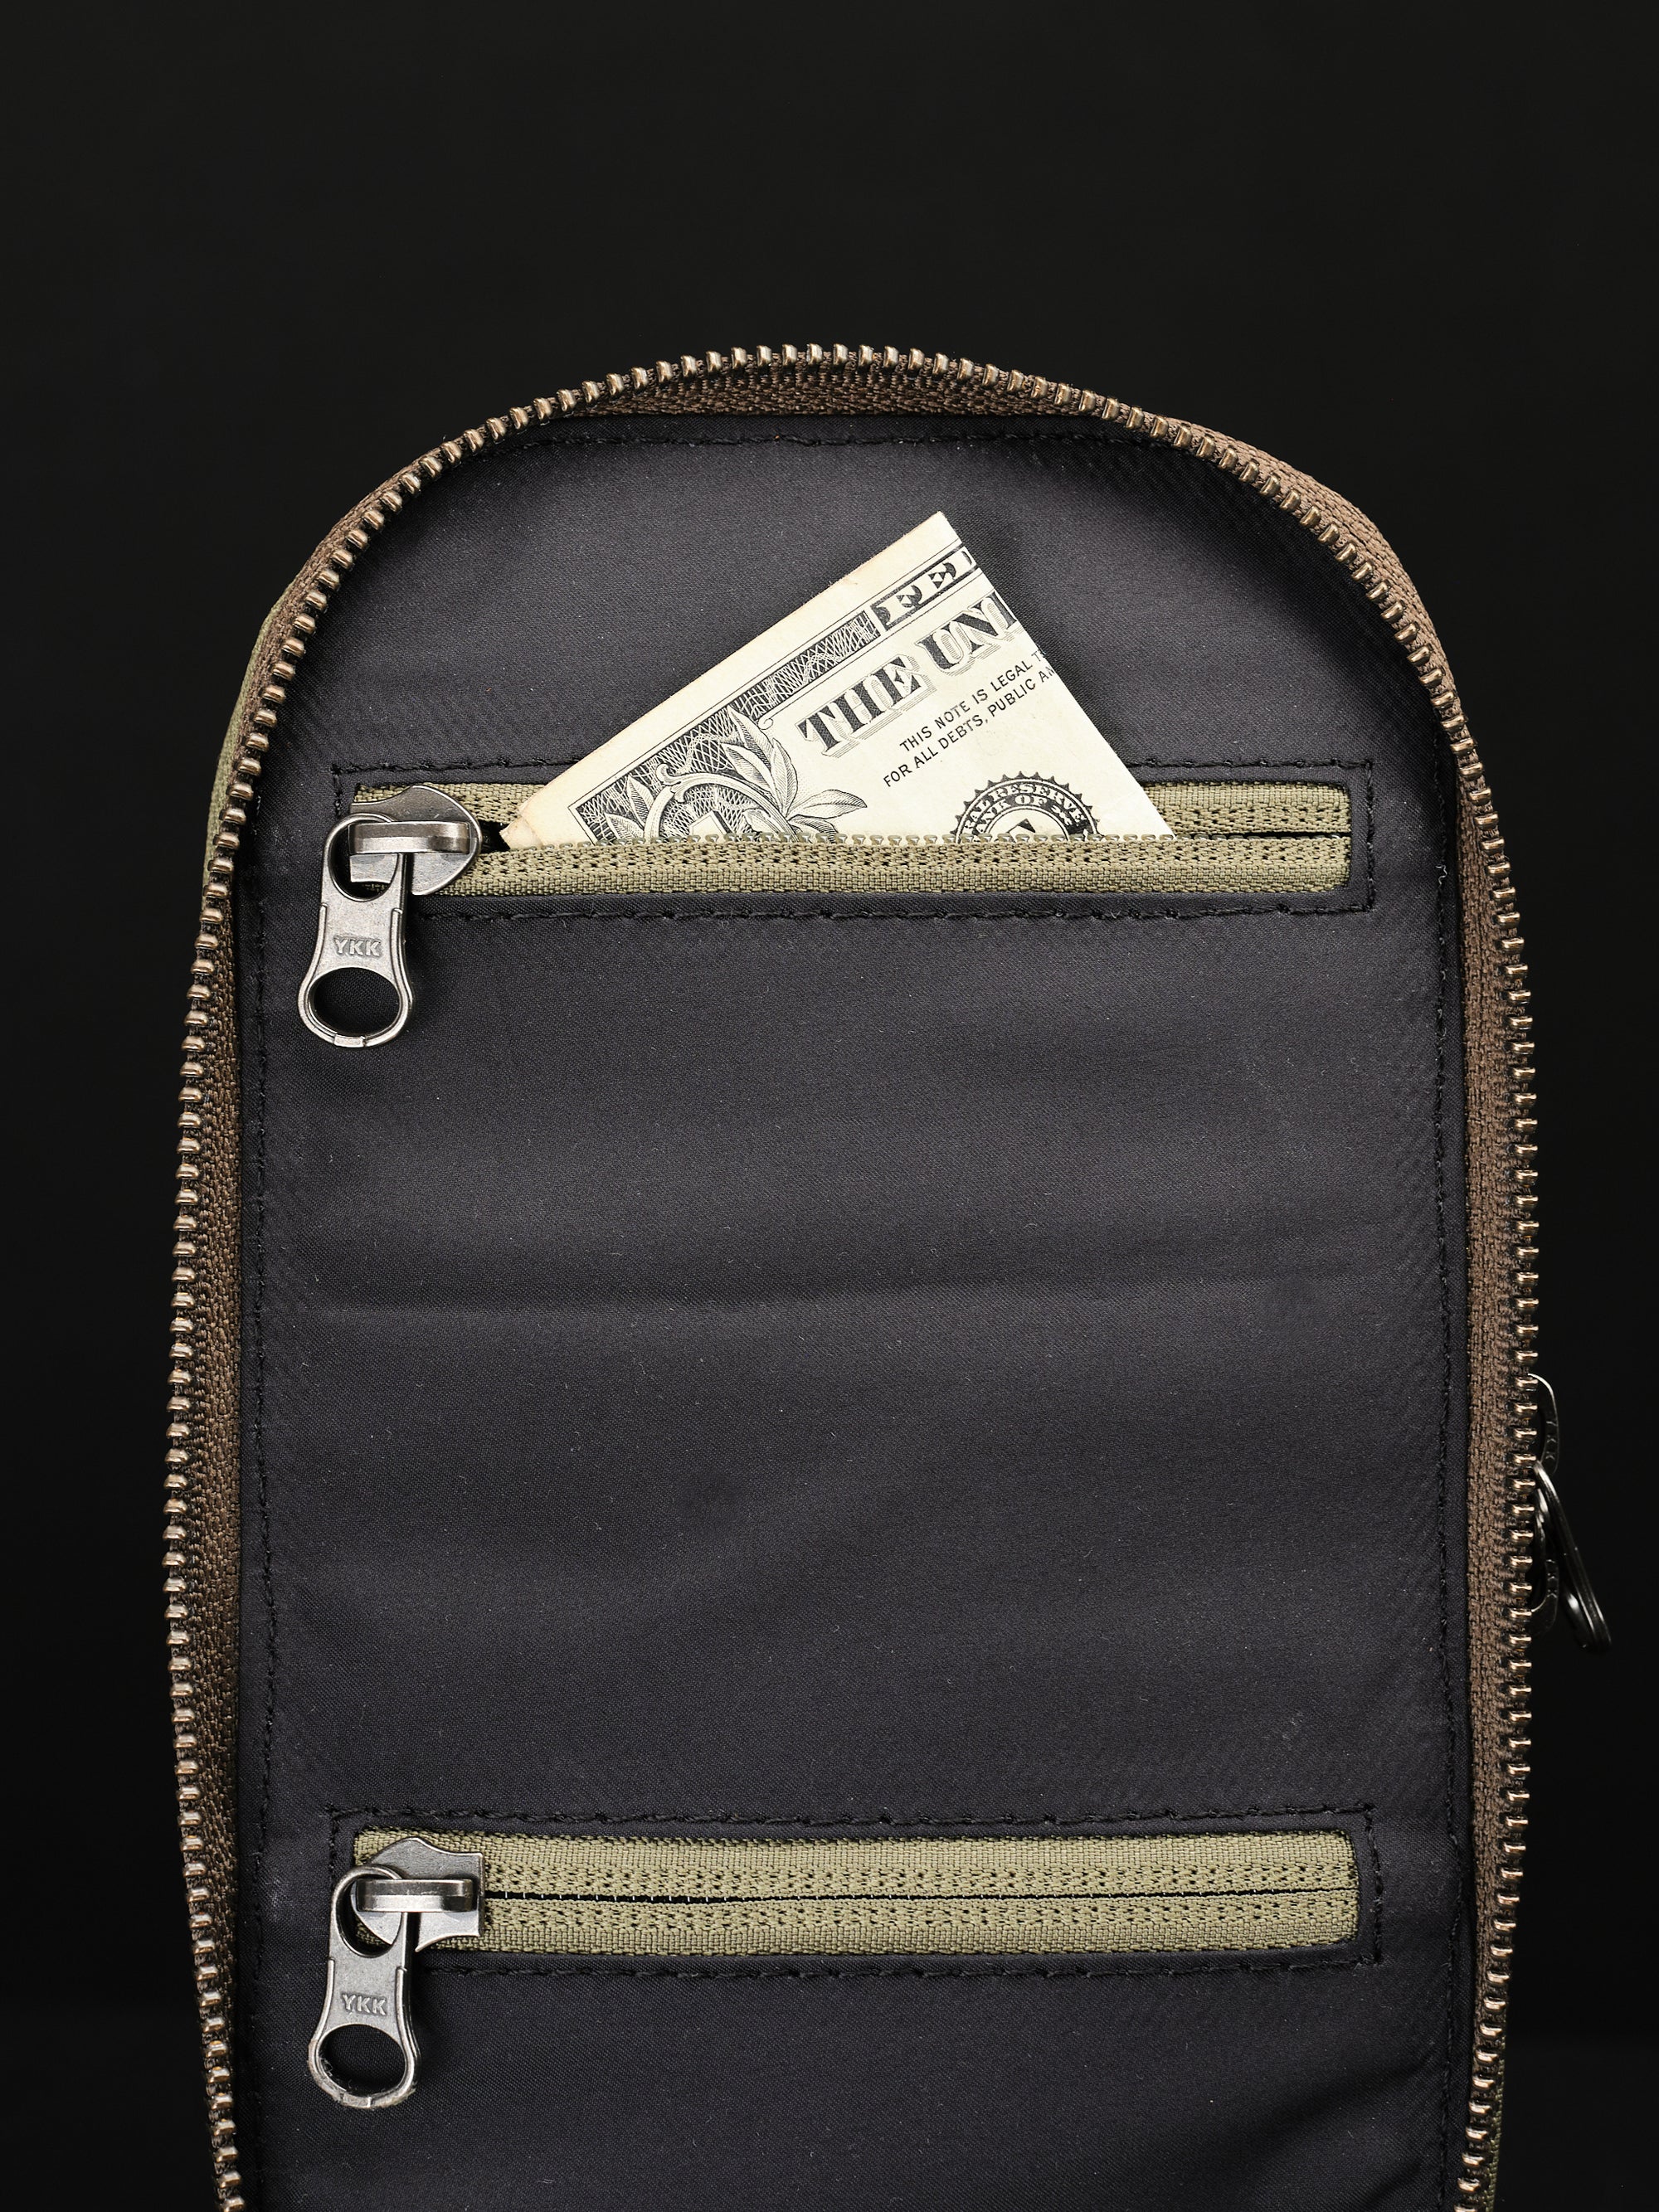 Small Interior Pocket. Dopp Kit Bag Green by Capra Leather